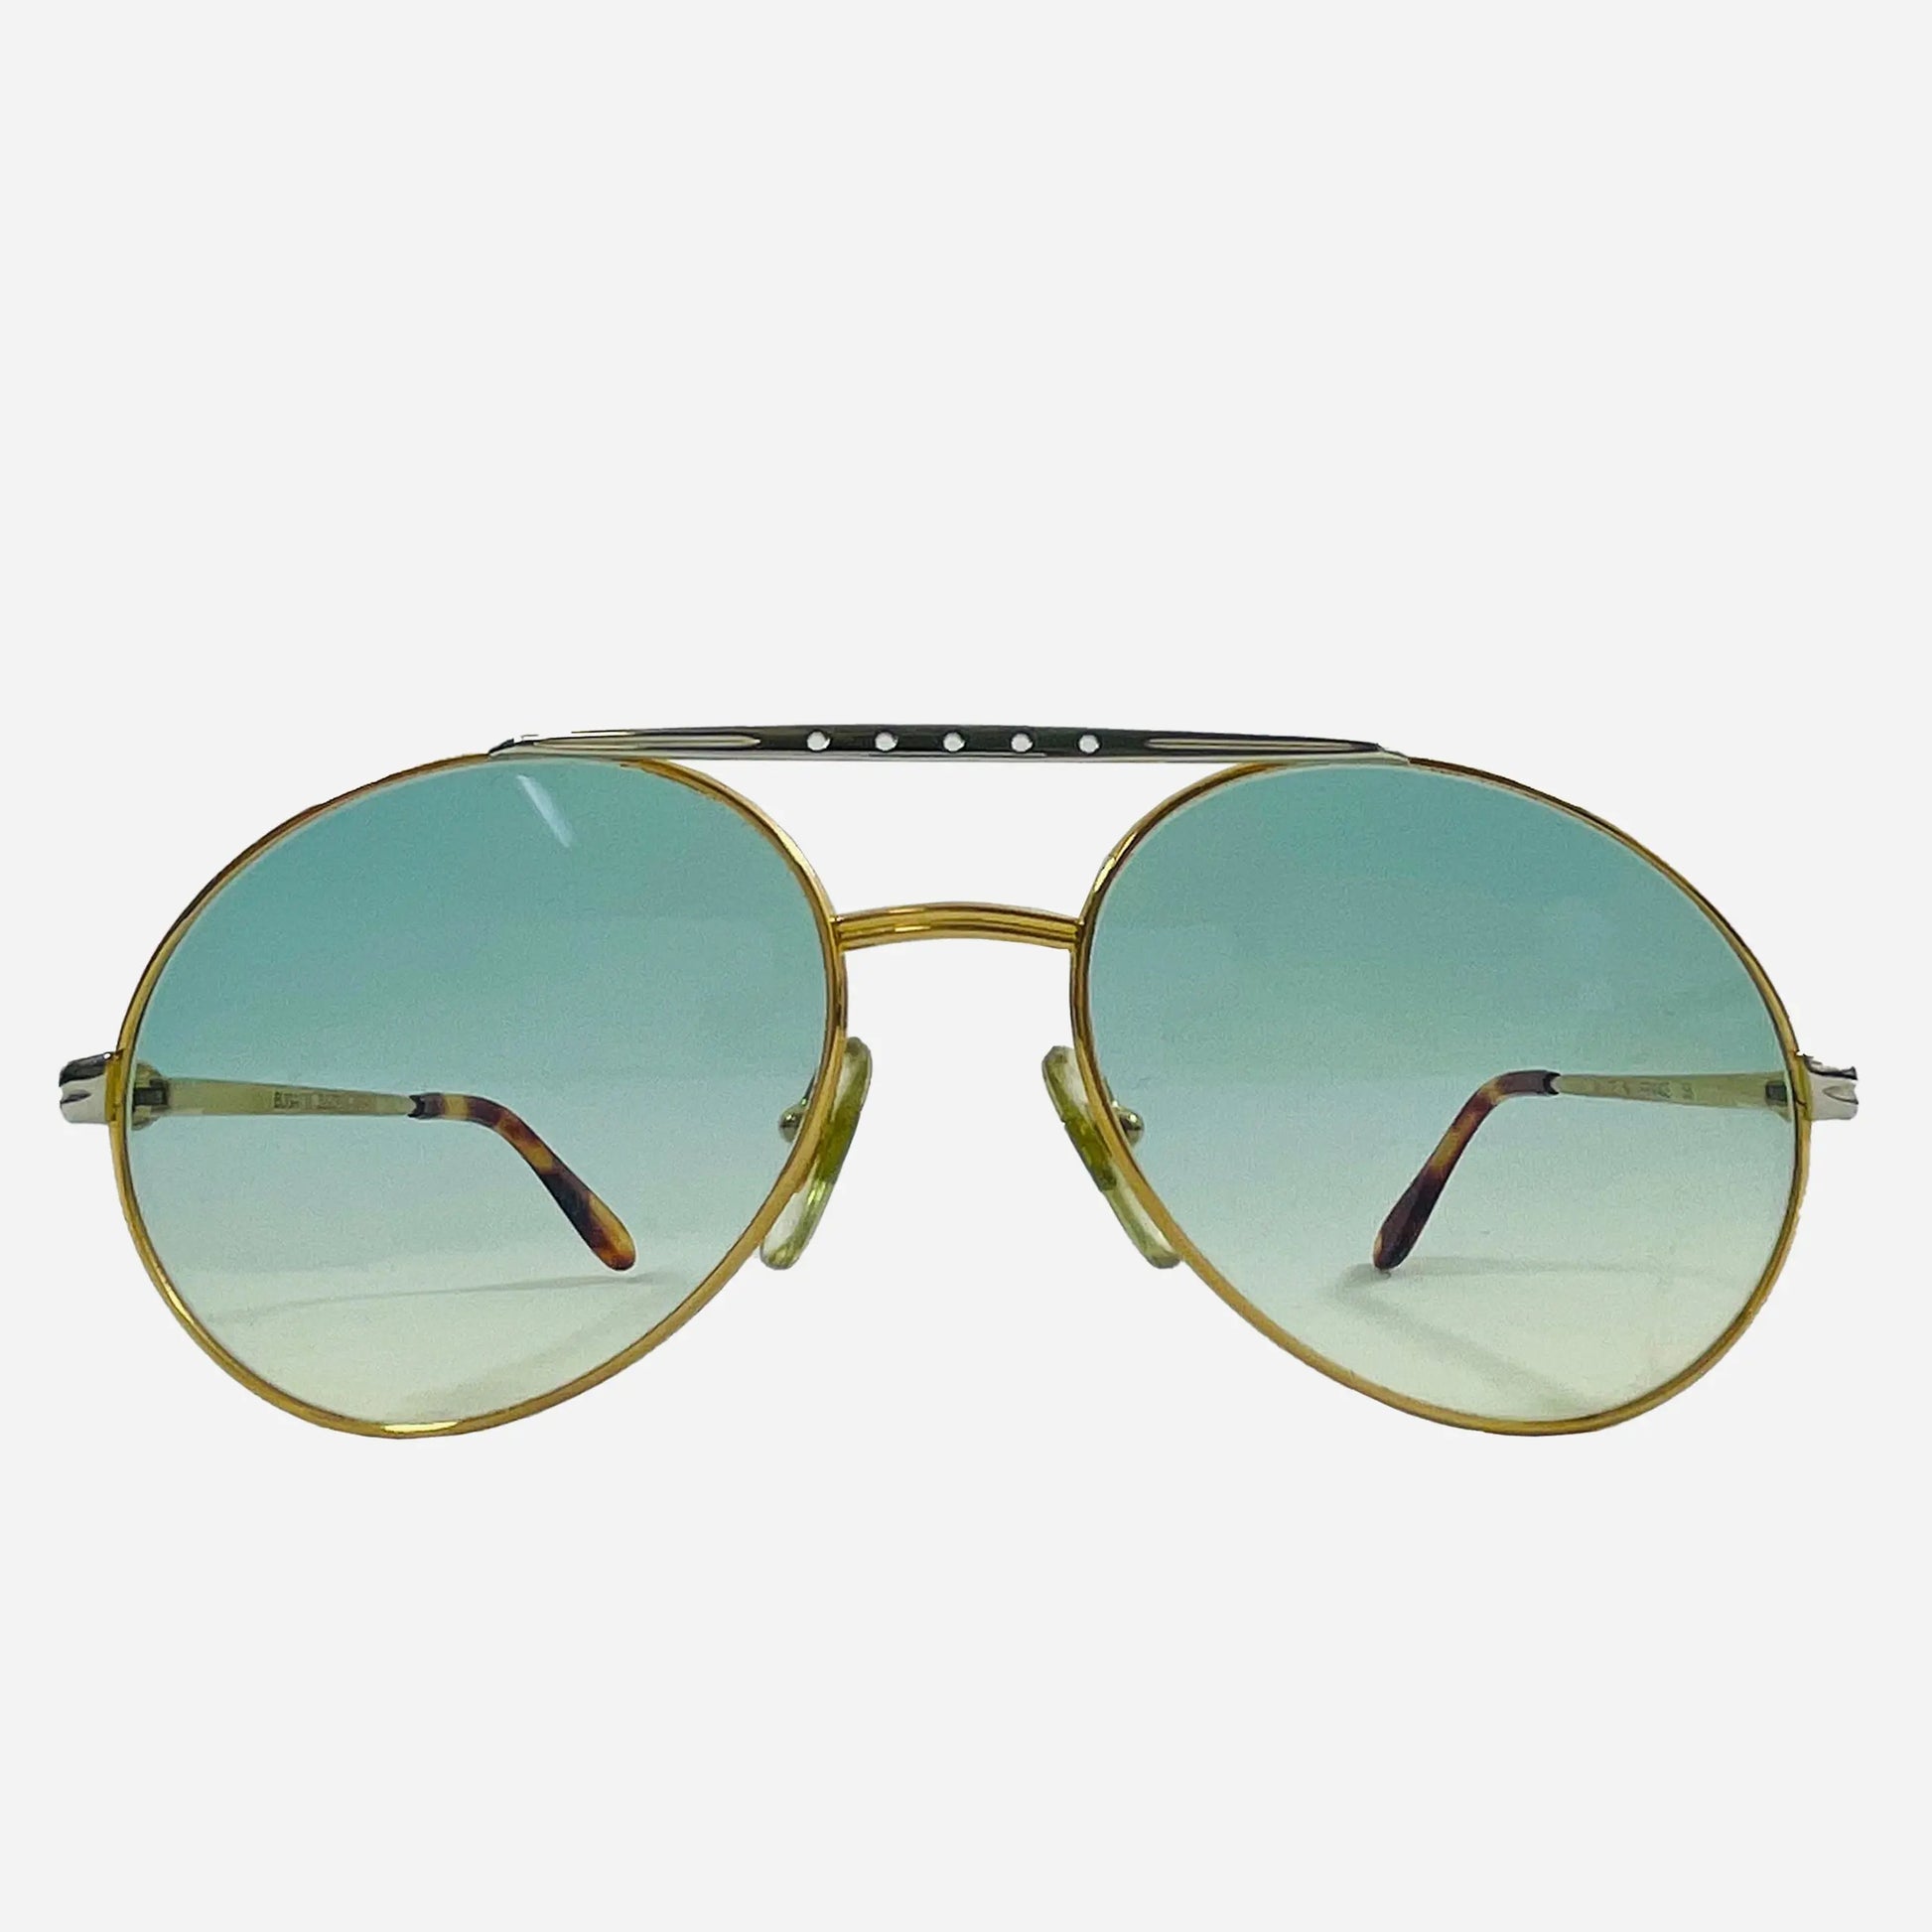 Ettore-Bugatti-Sonnenbrille-Sunglasses-Gold-Plated-14CT-the-seekers